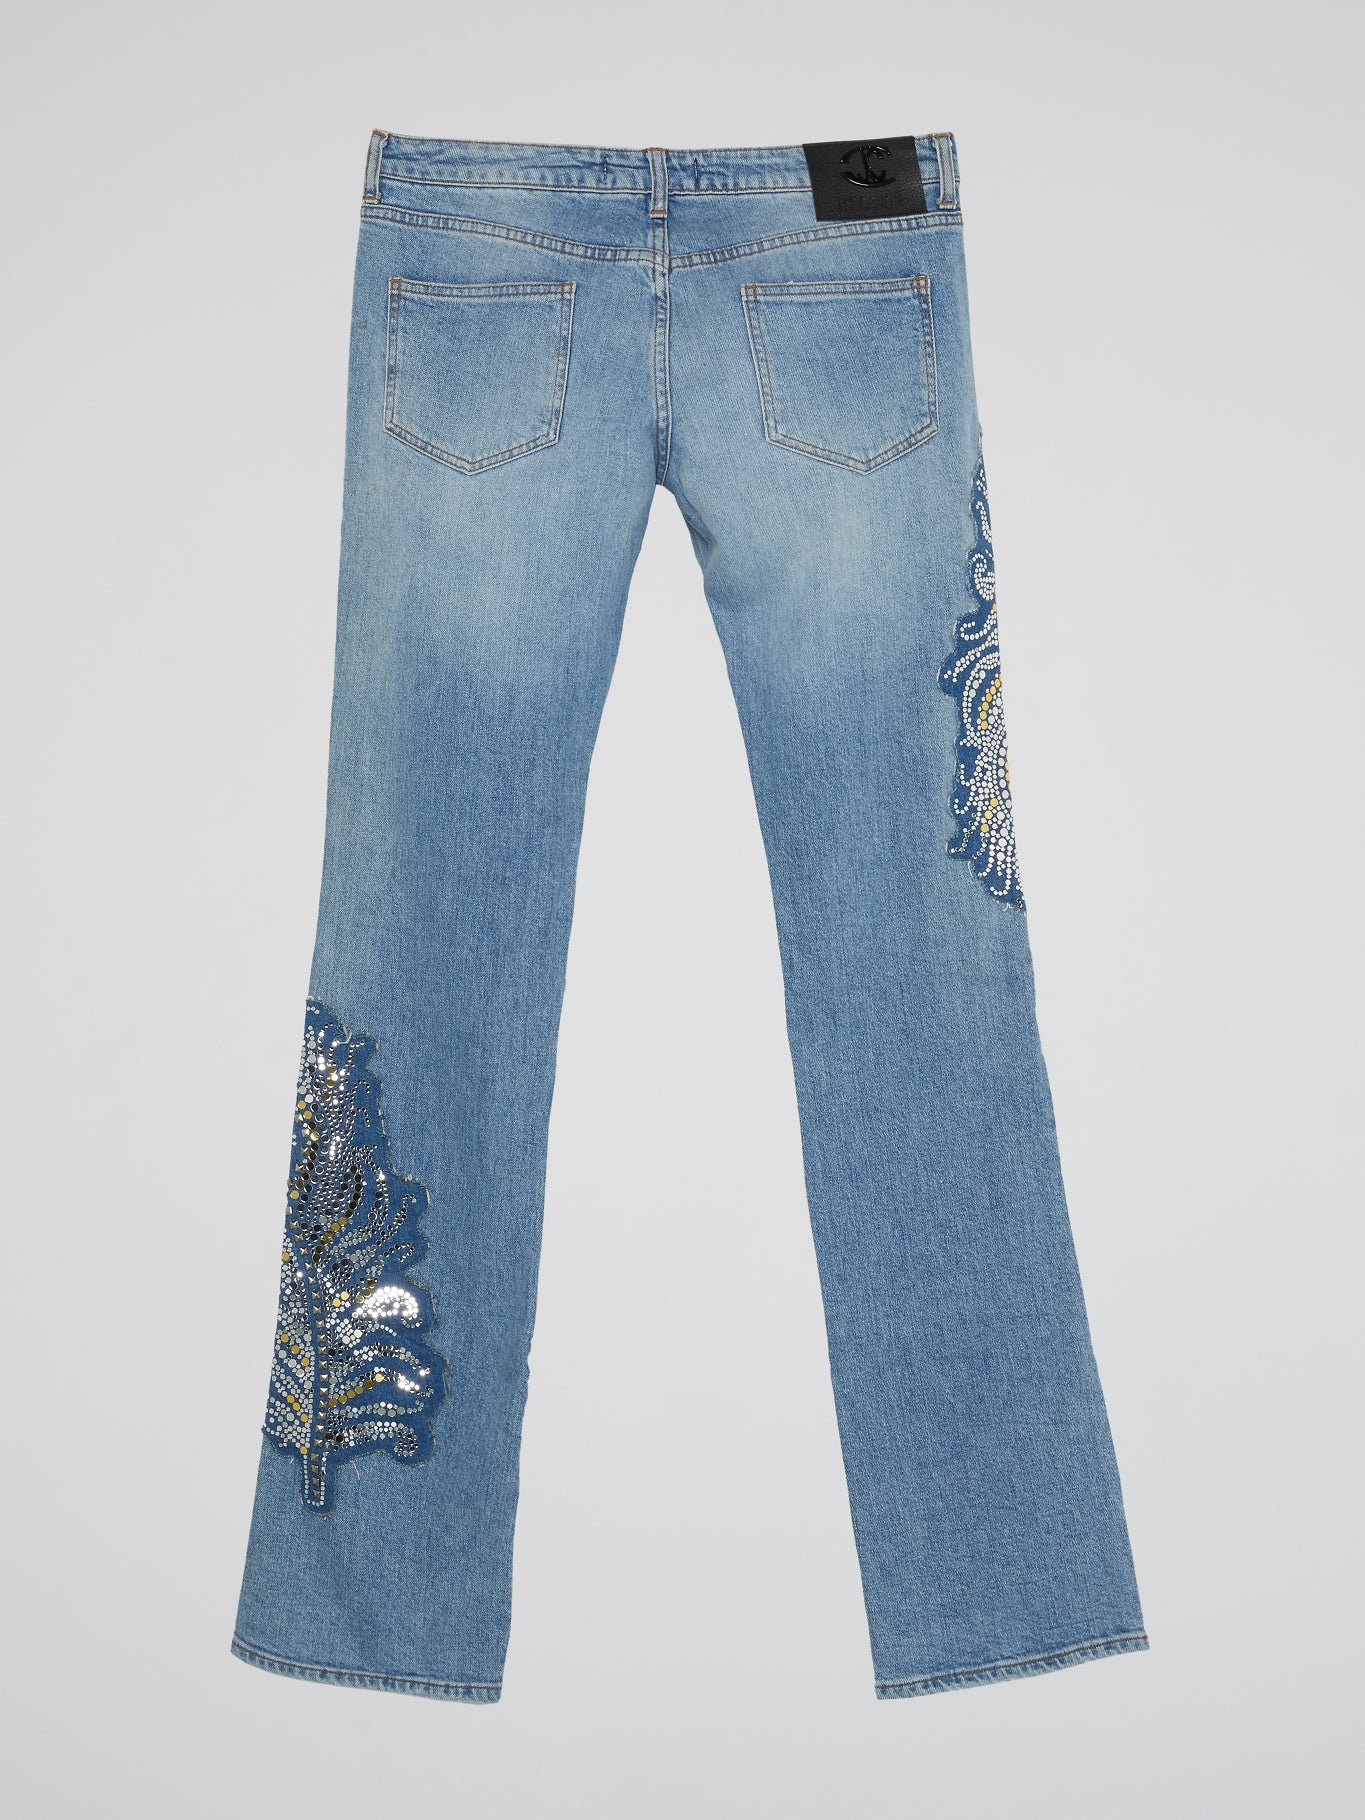 Blue Studded Denim Jeans